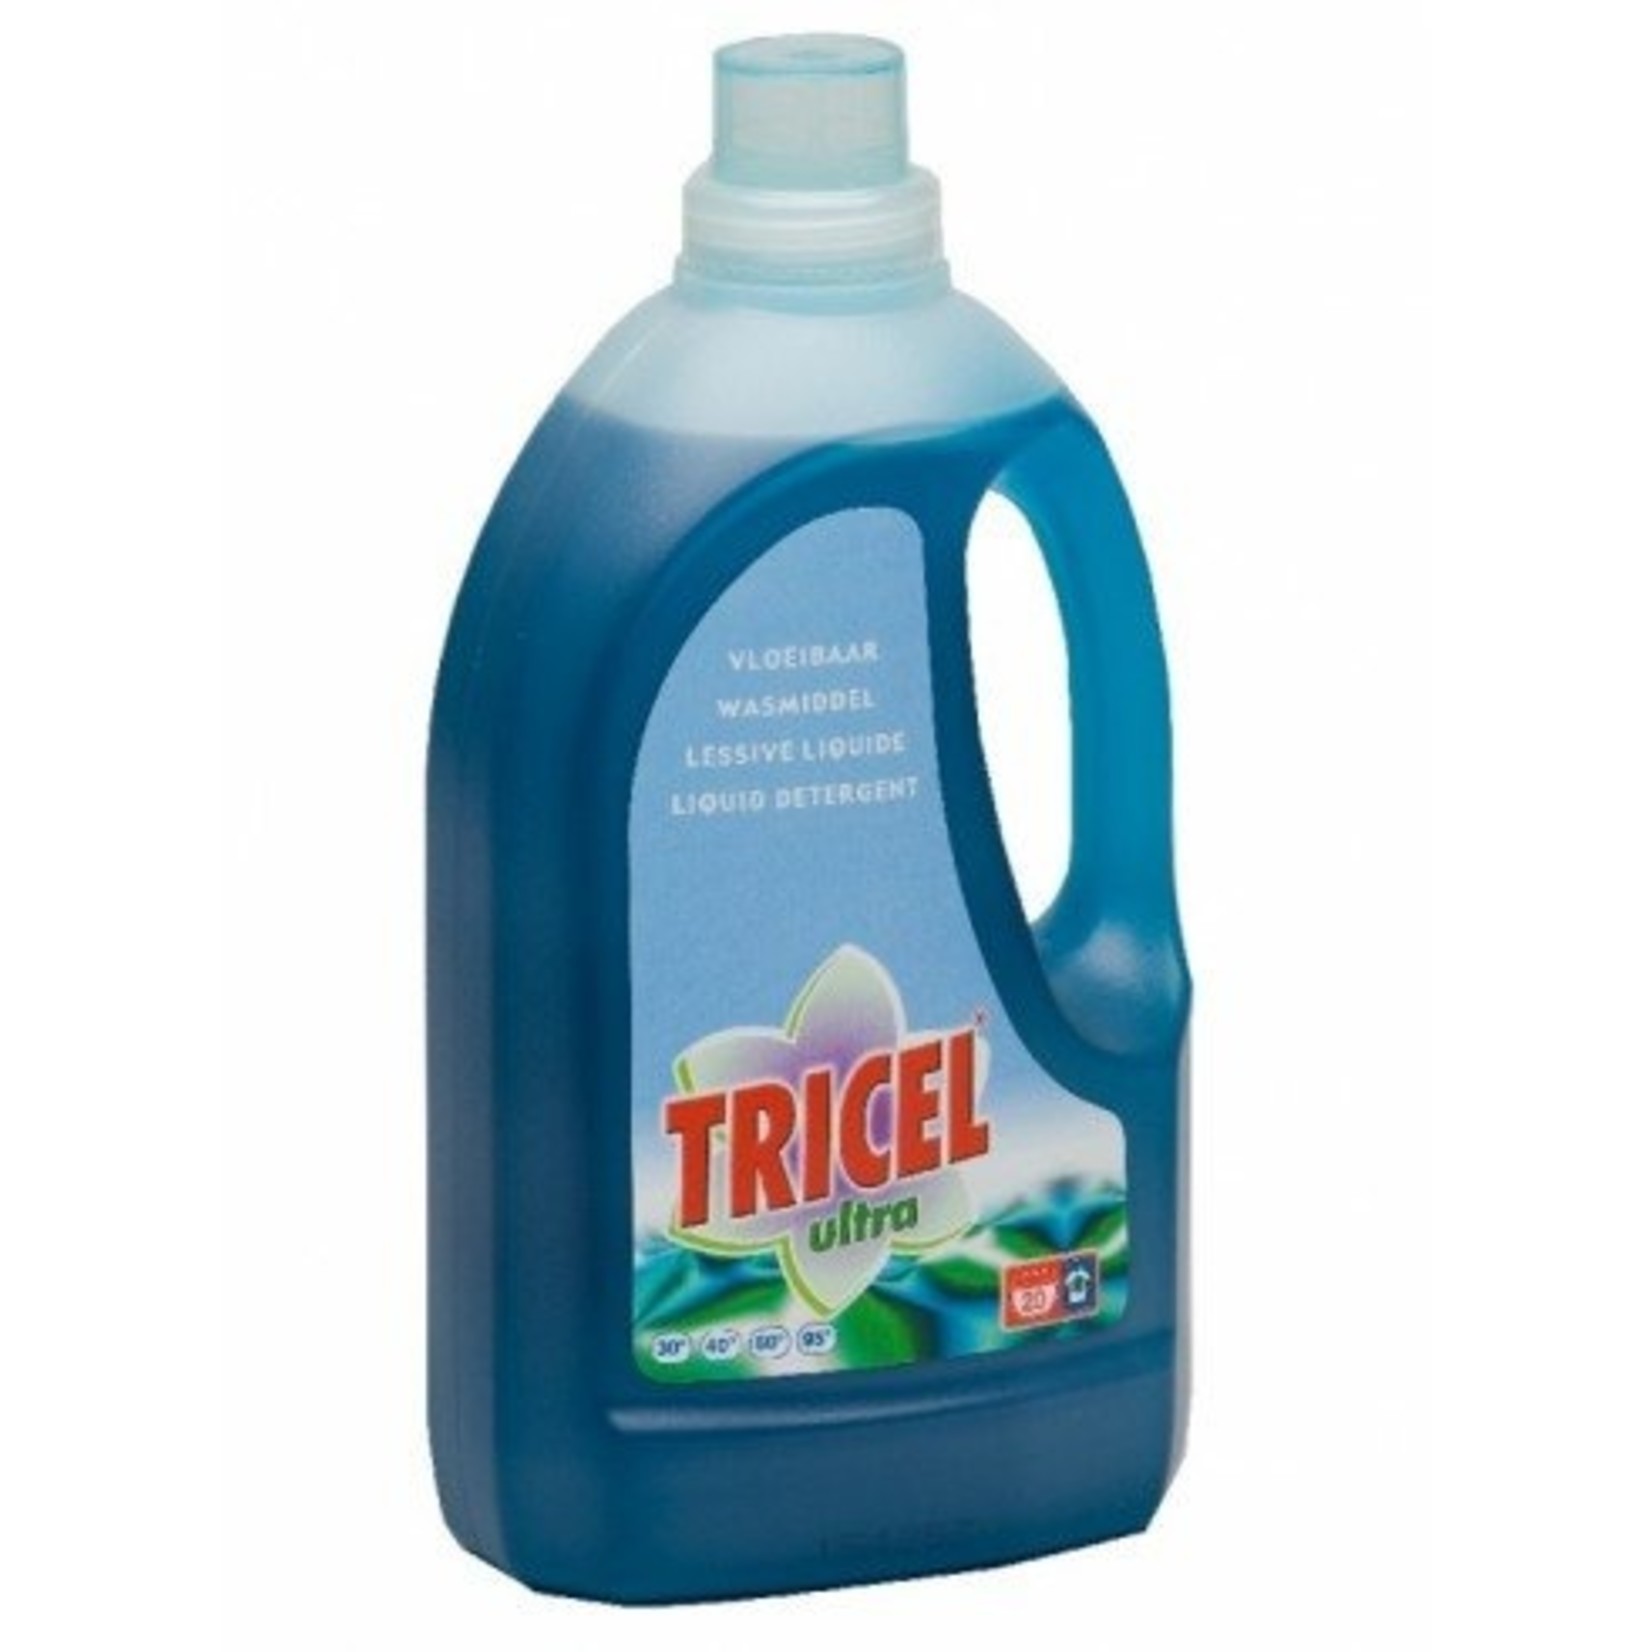 Tricel Wasmiddel Ultra vloeibaar 1.5 liter